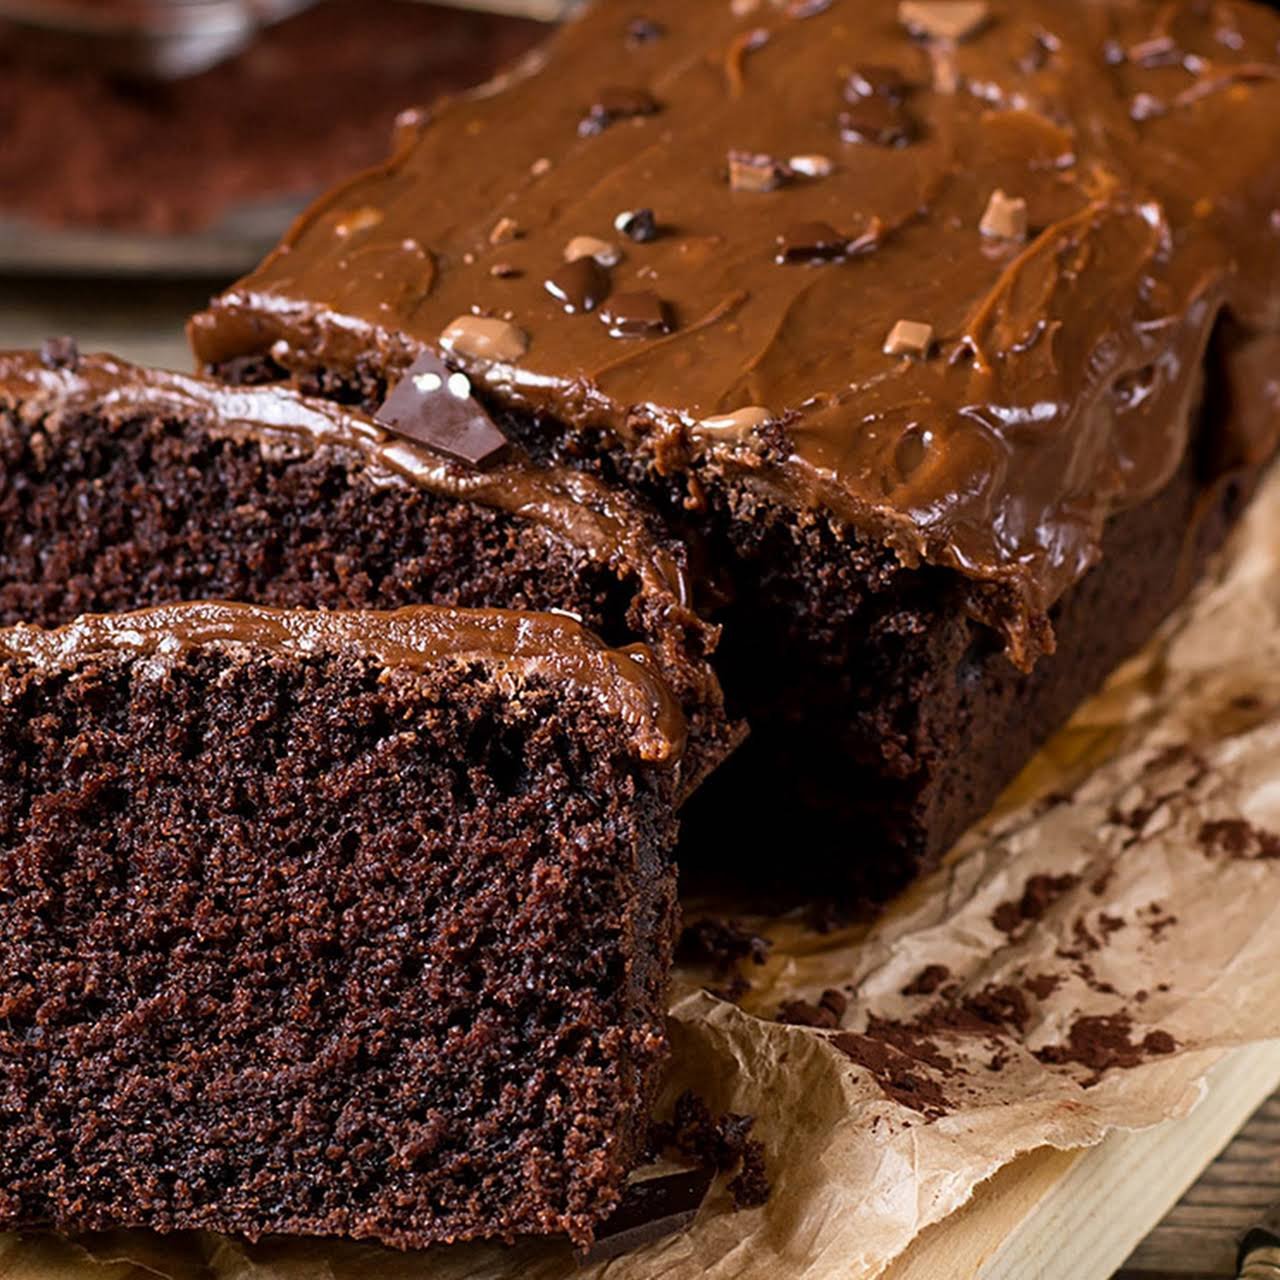 Кухне шоколадный пирог. Пирог с шоколадом. Мокрый шоколадный пирог. Влажный шоколадный пирог. Влажный шоколадный кекс.